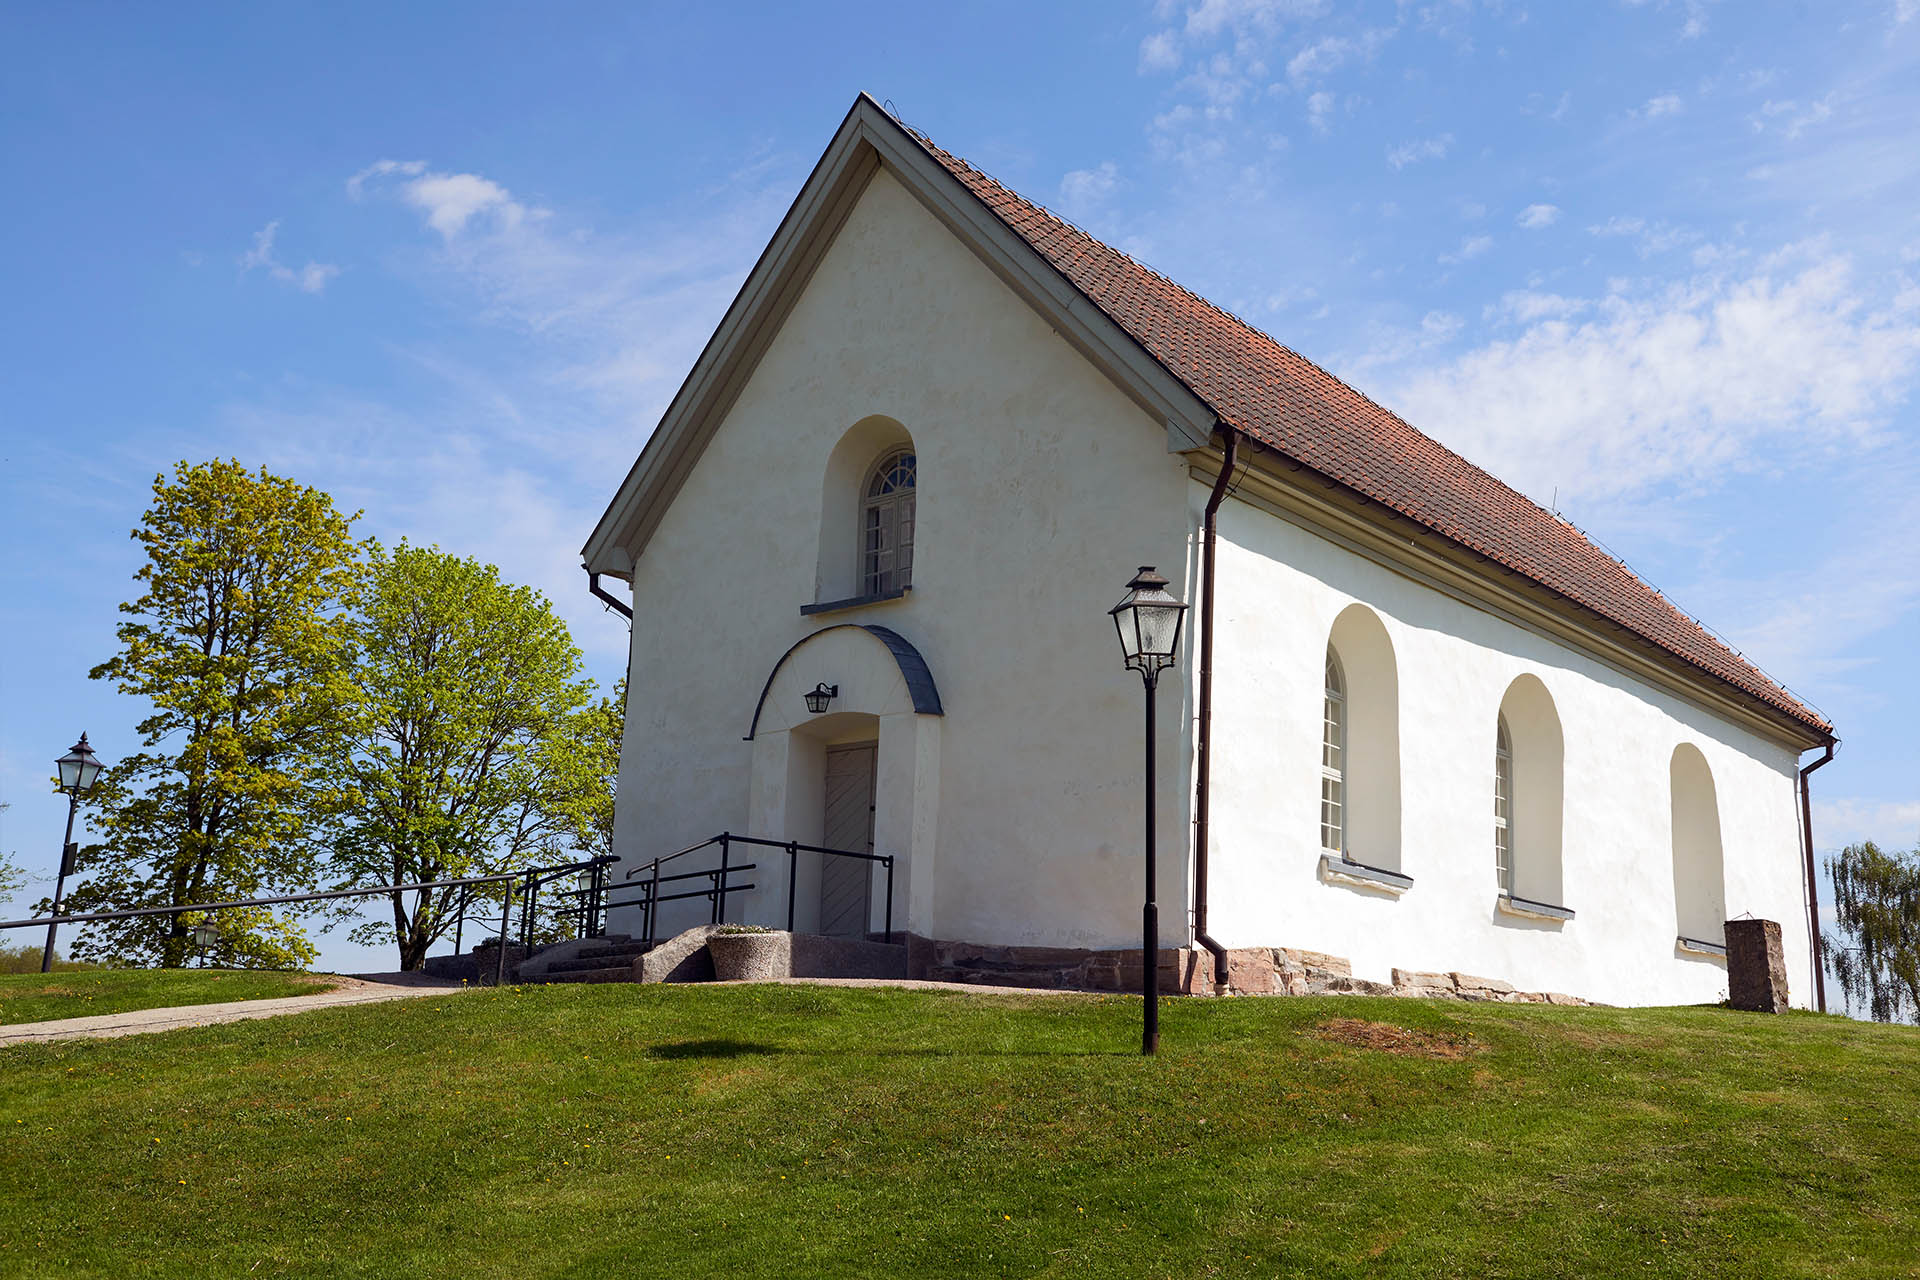 Tärby kyrka